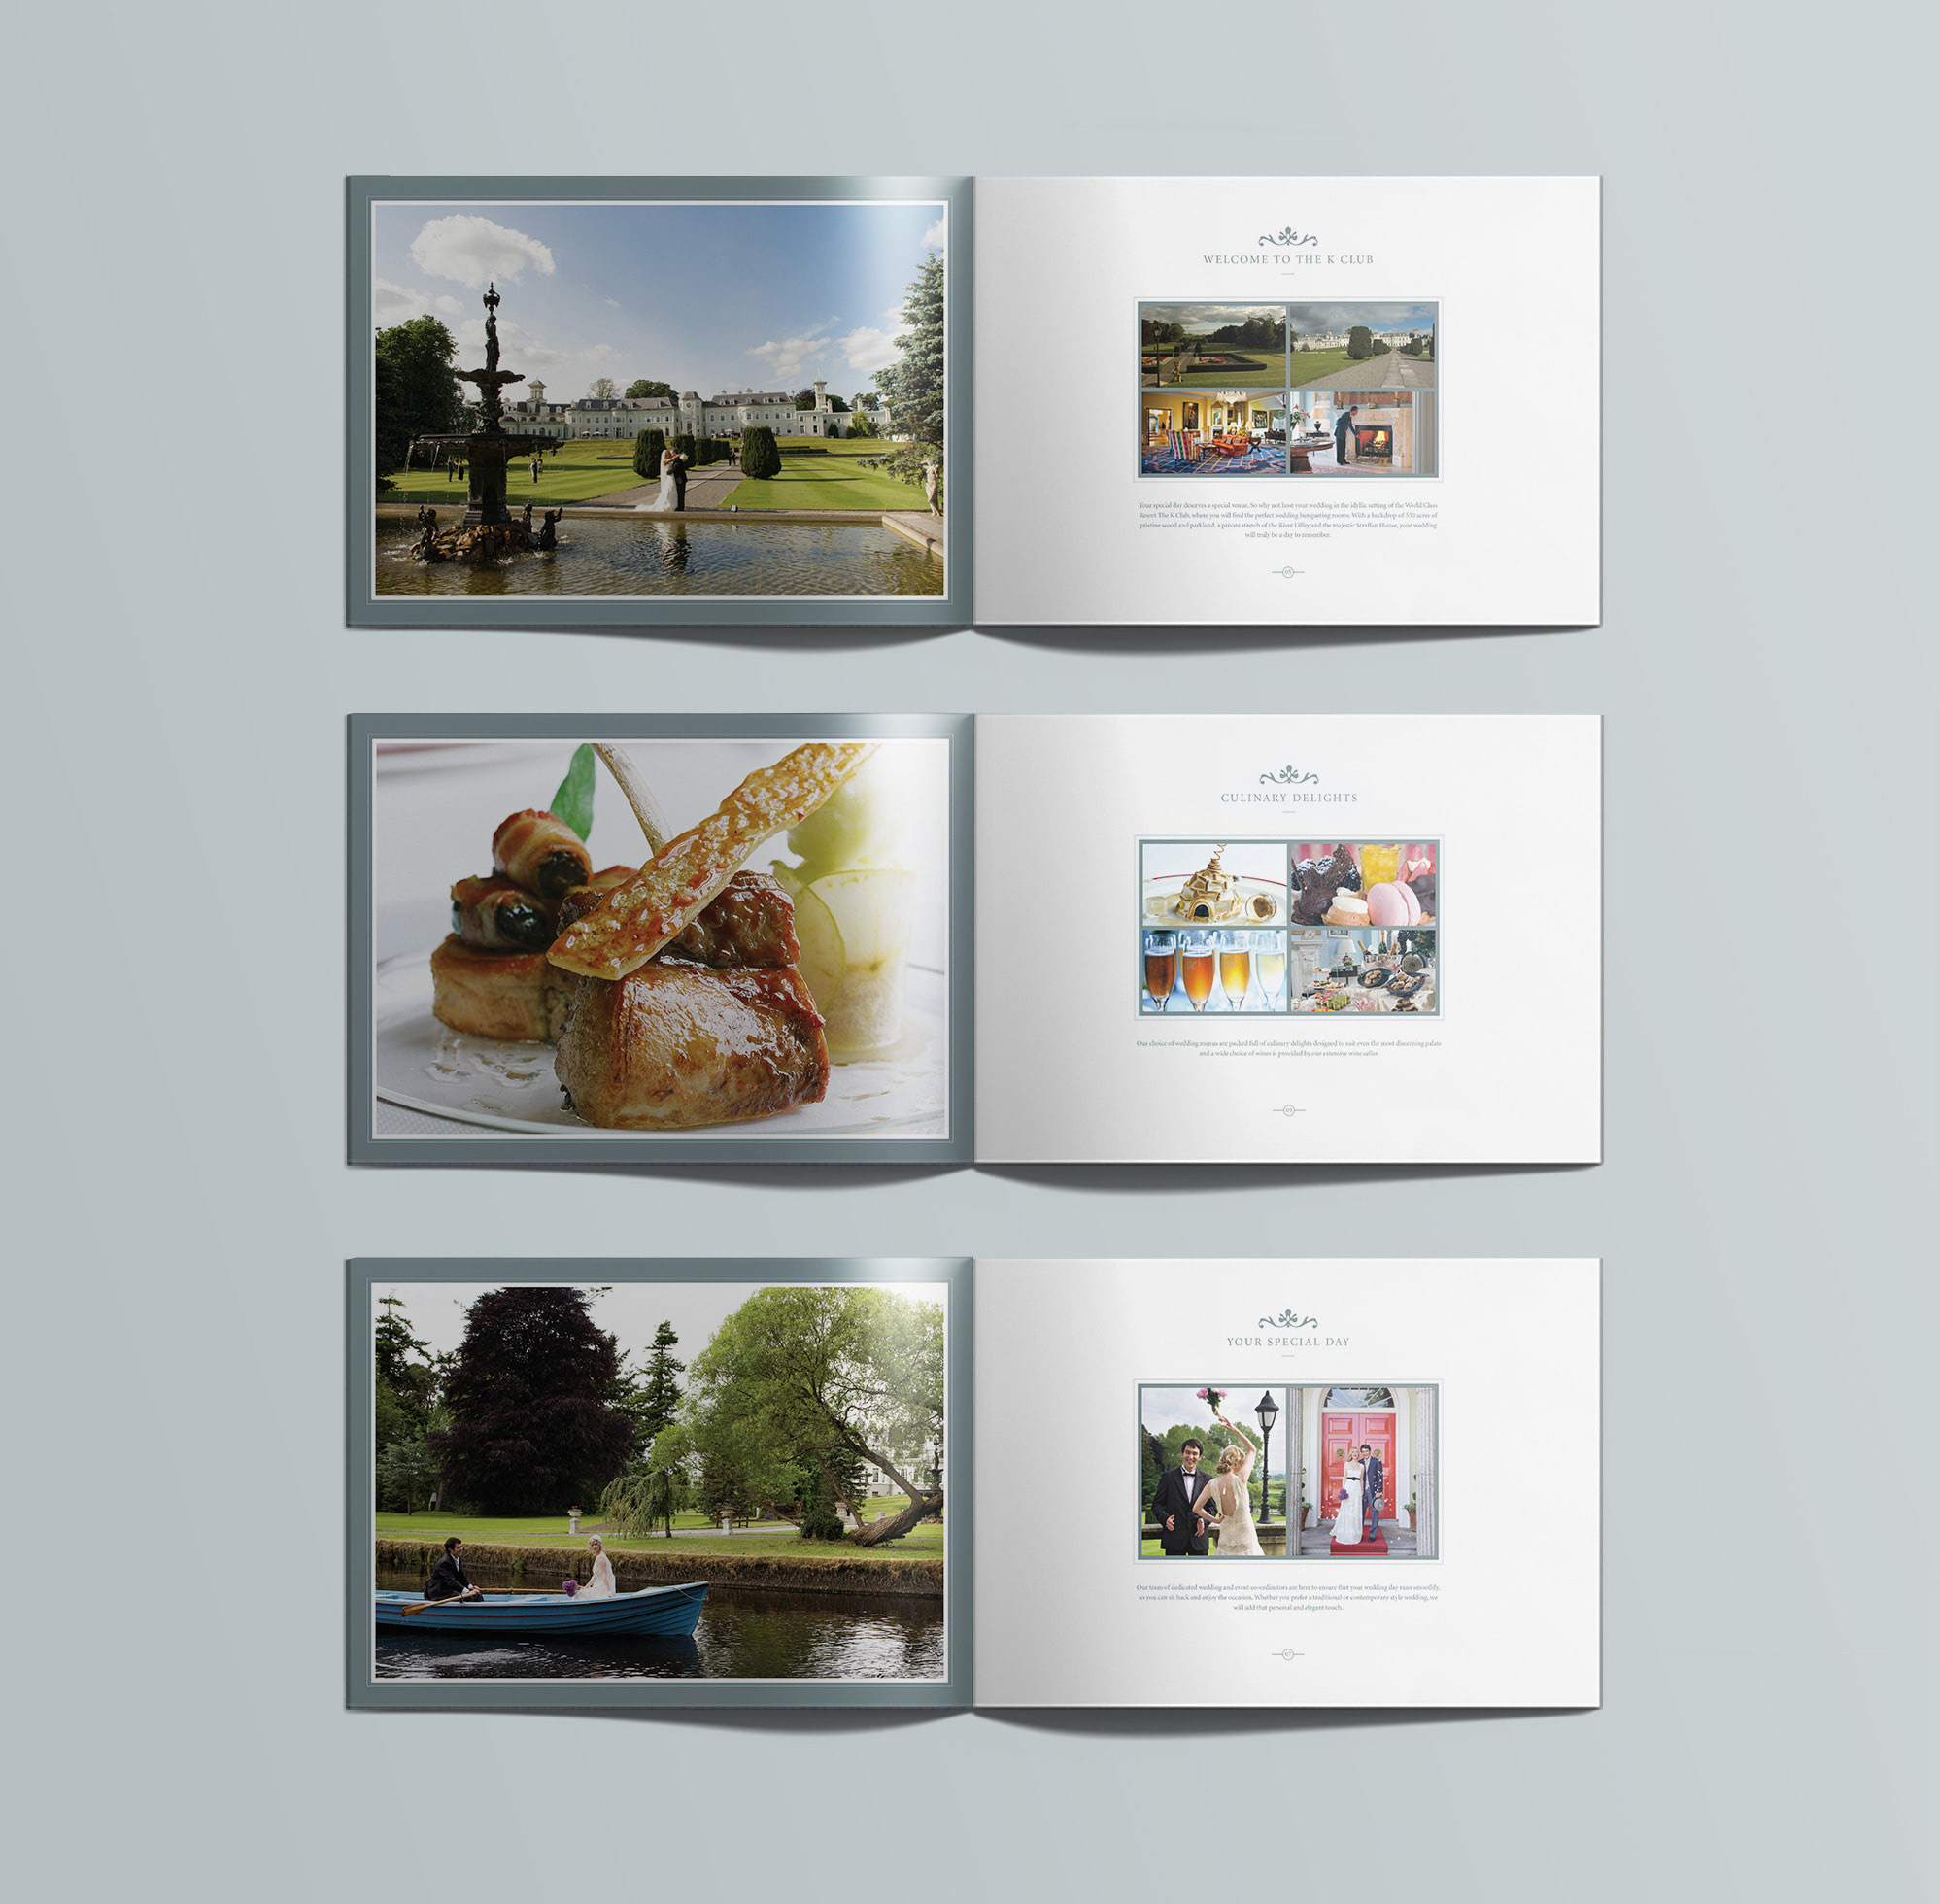 Fuse Design Ltd - Hotel wedding brochure design